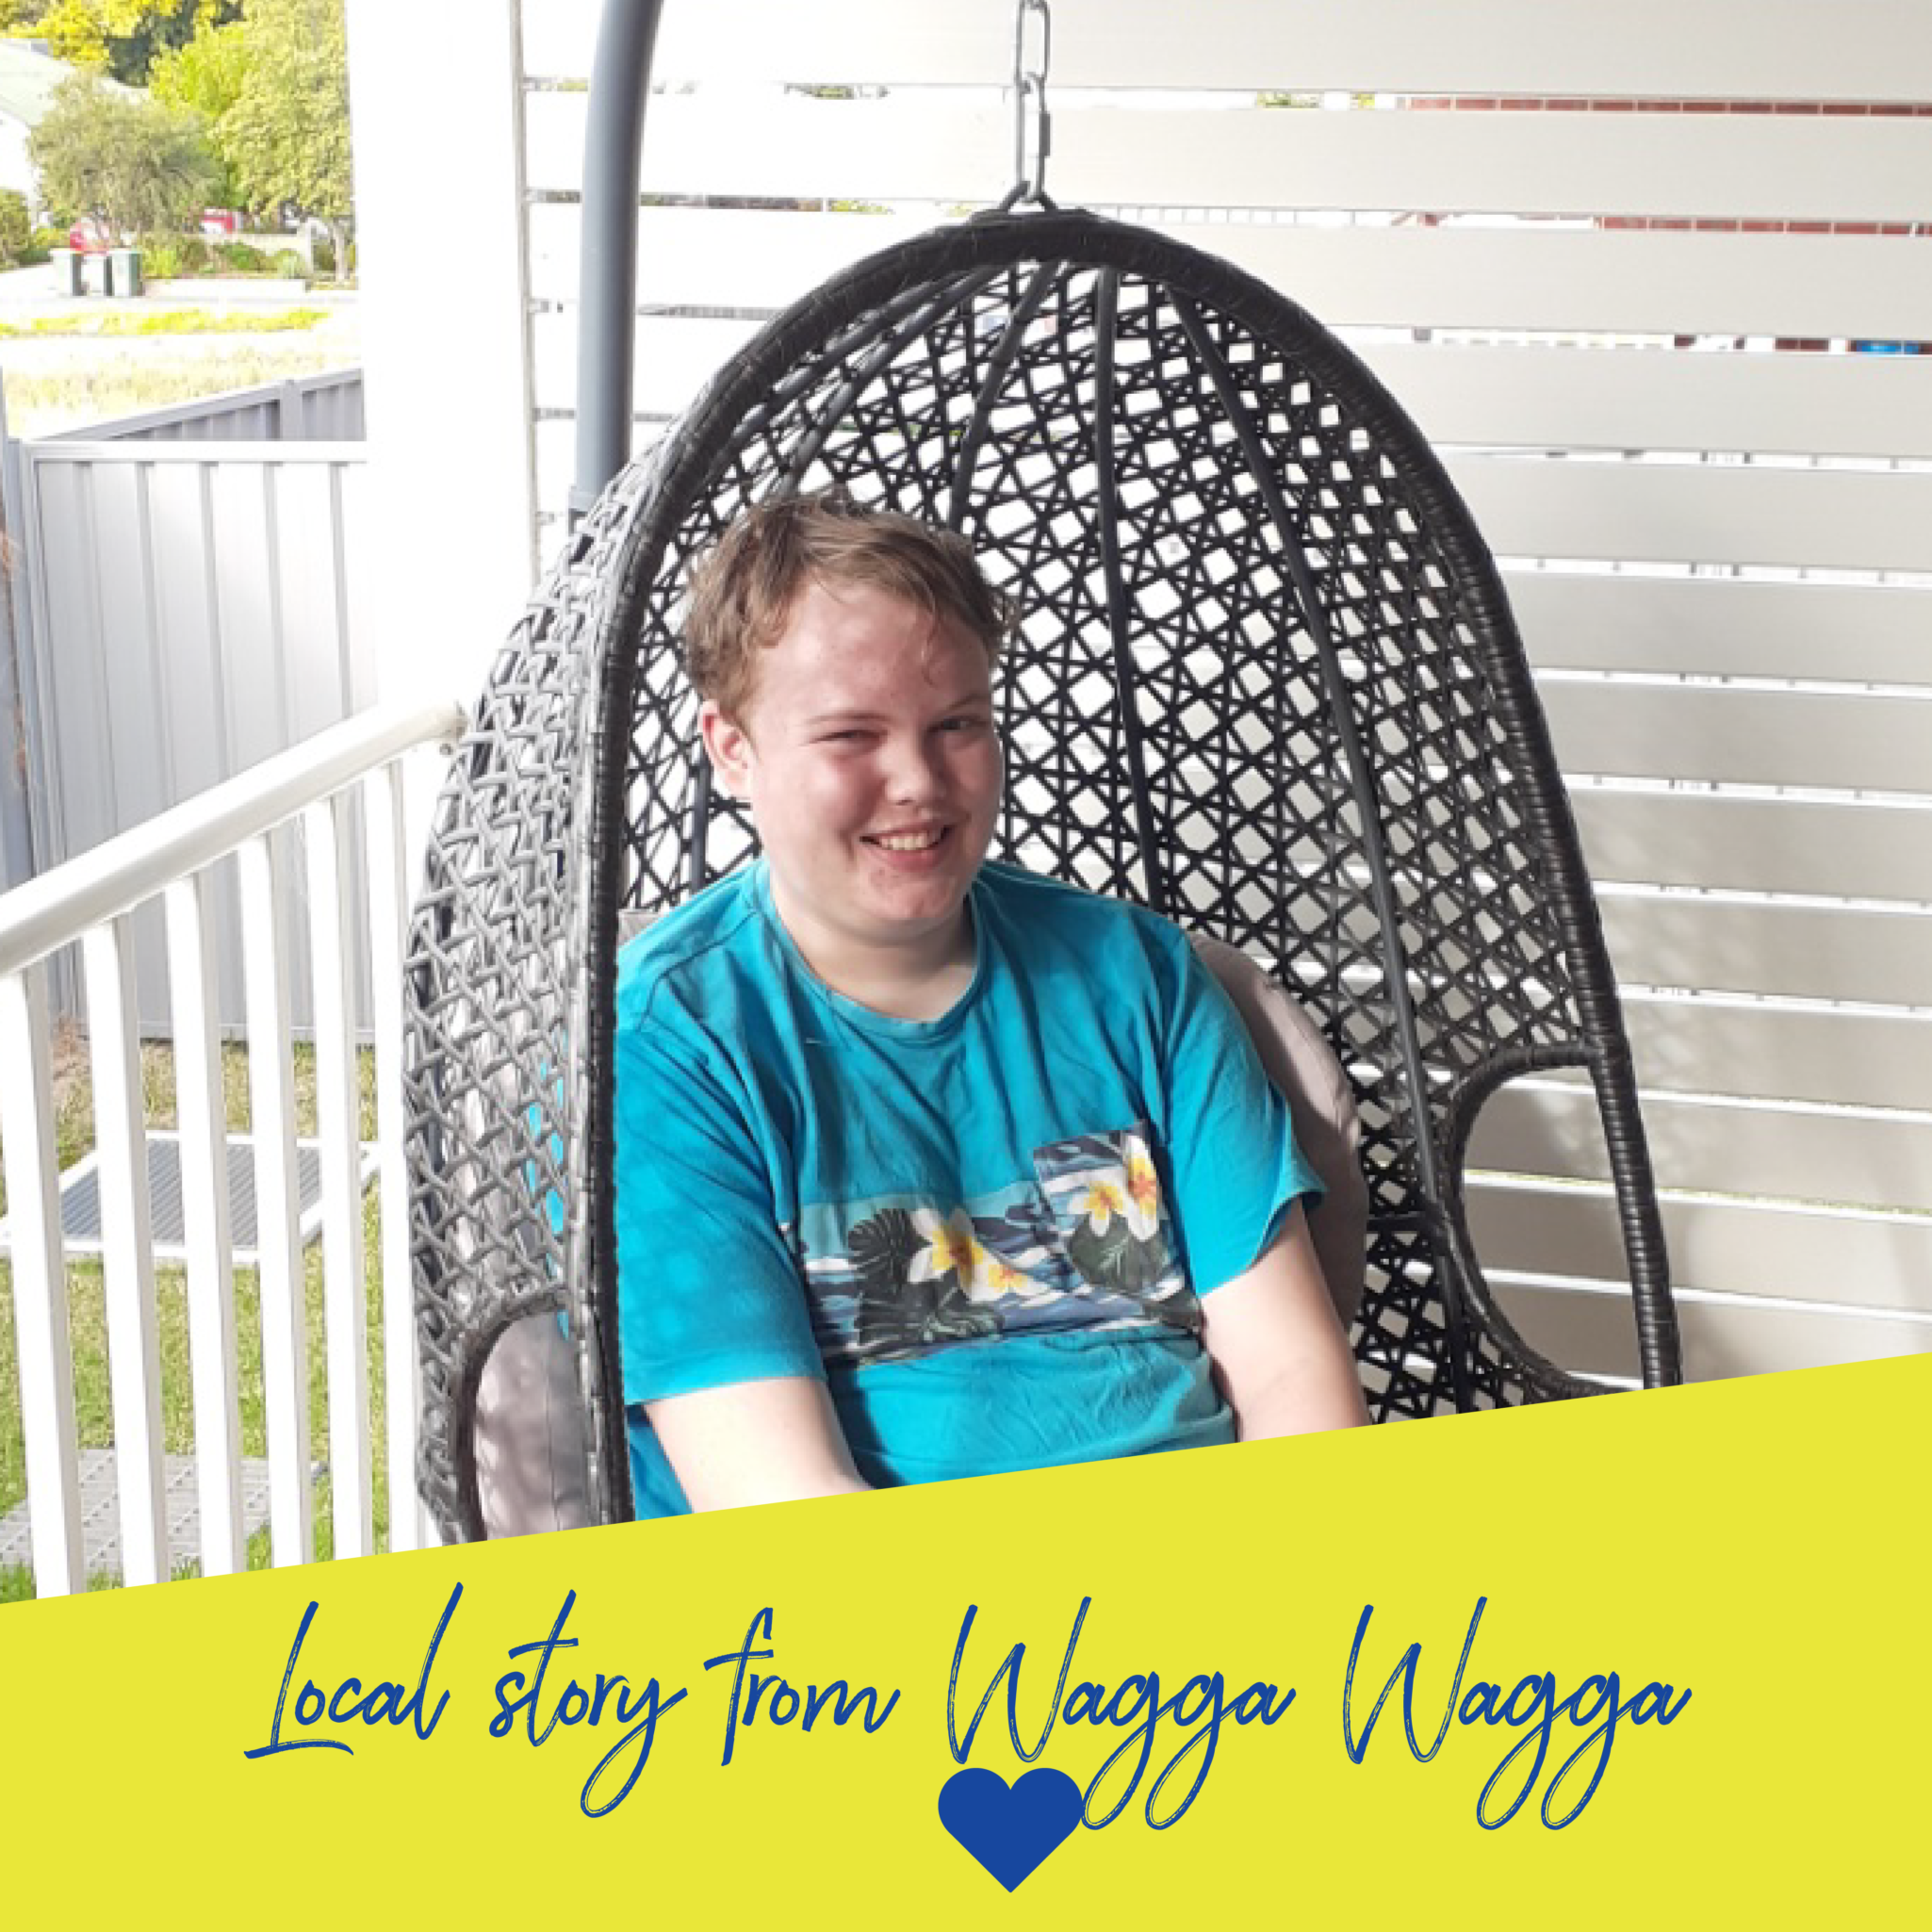 Local story from Wagga Wagga